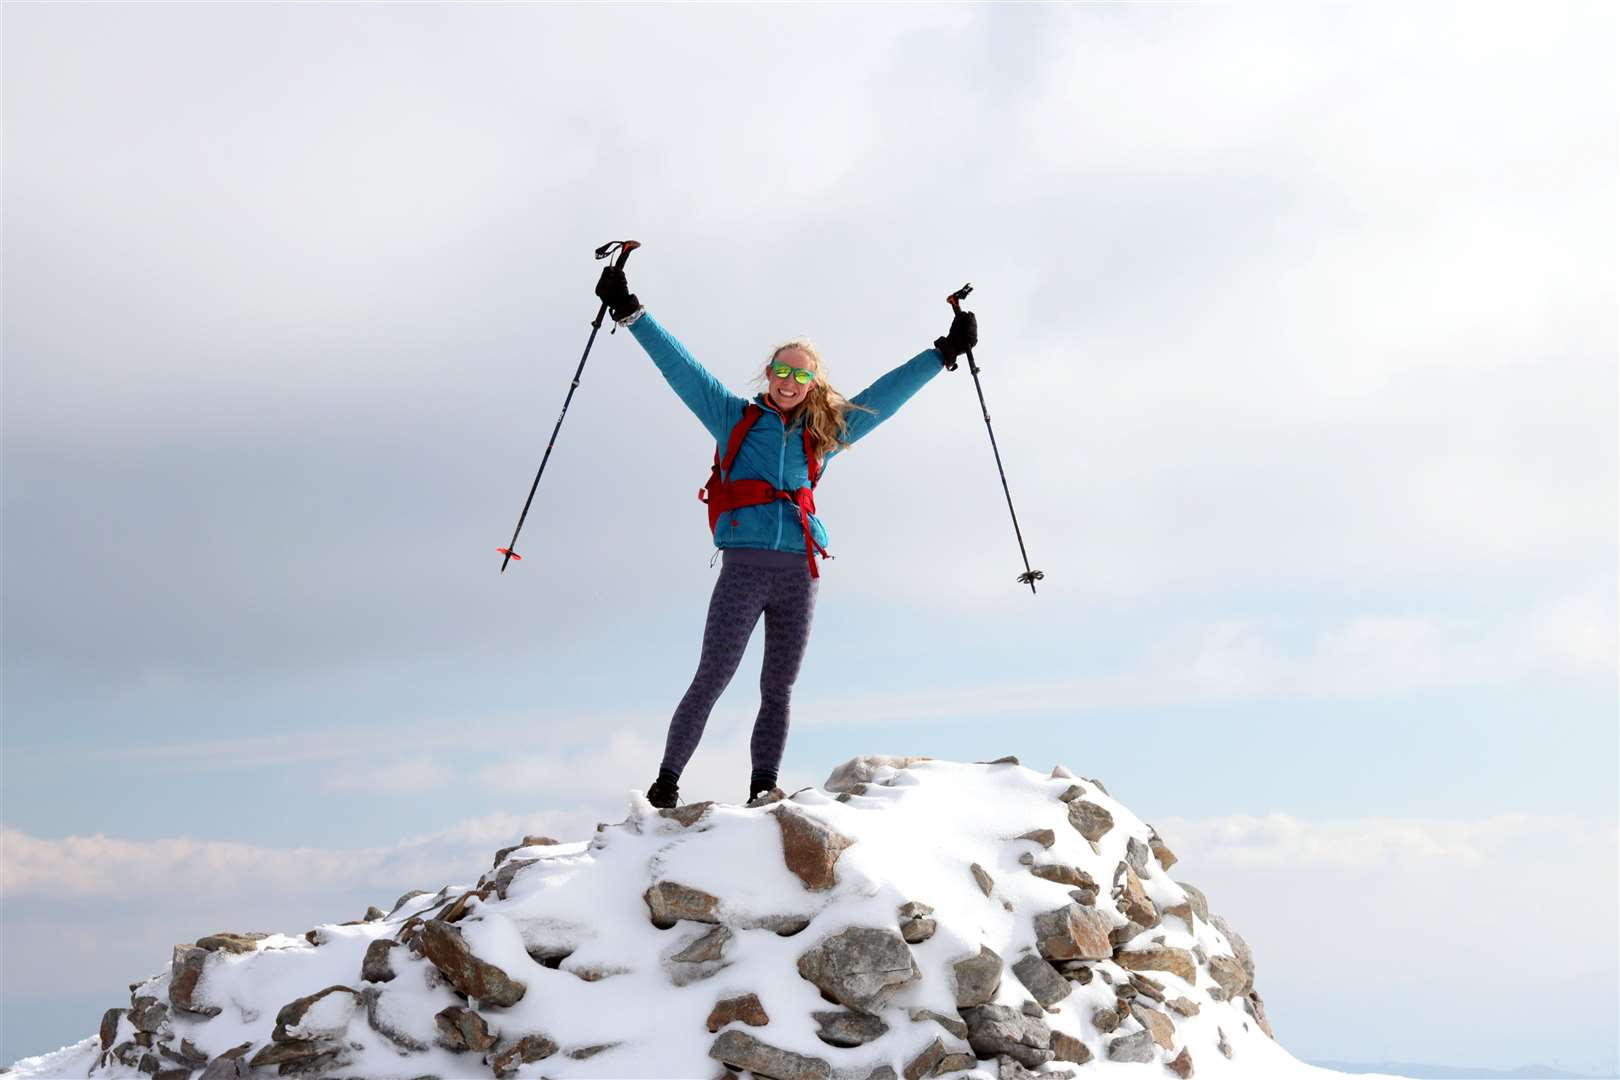 Anna climbed all 282 Munros in Scotland this winter season.